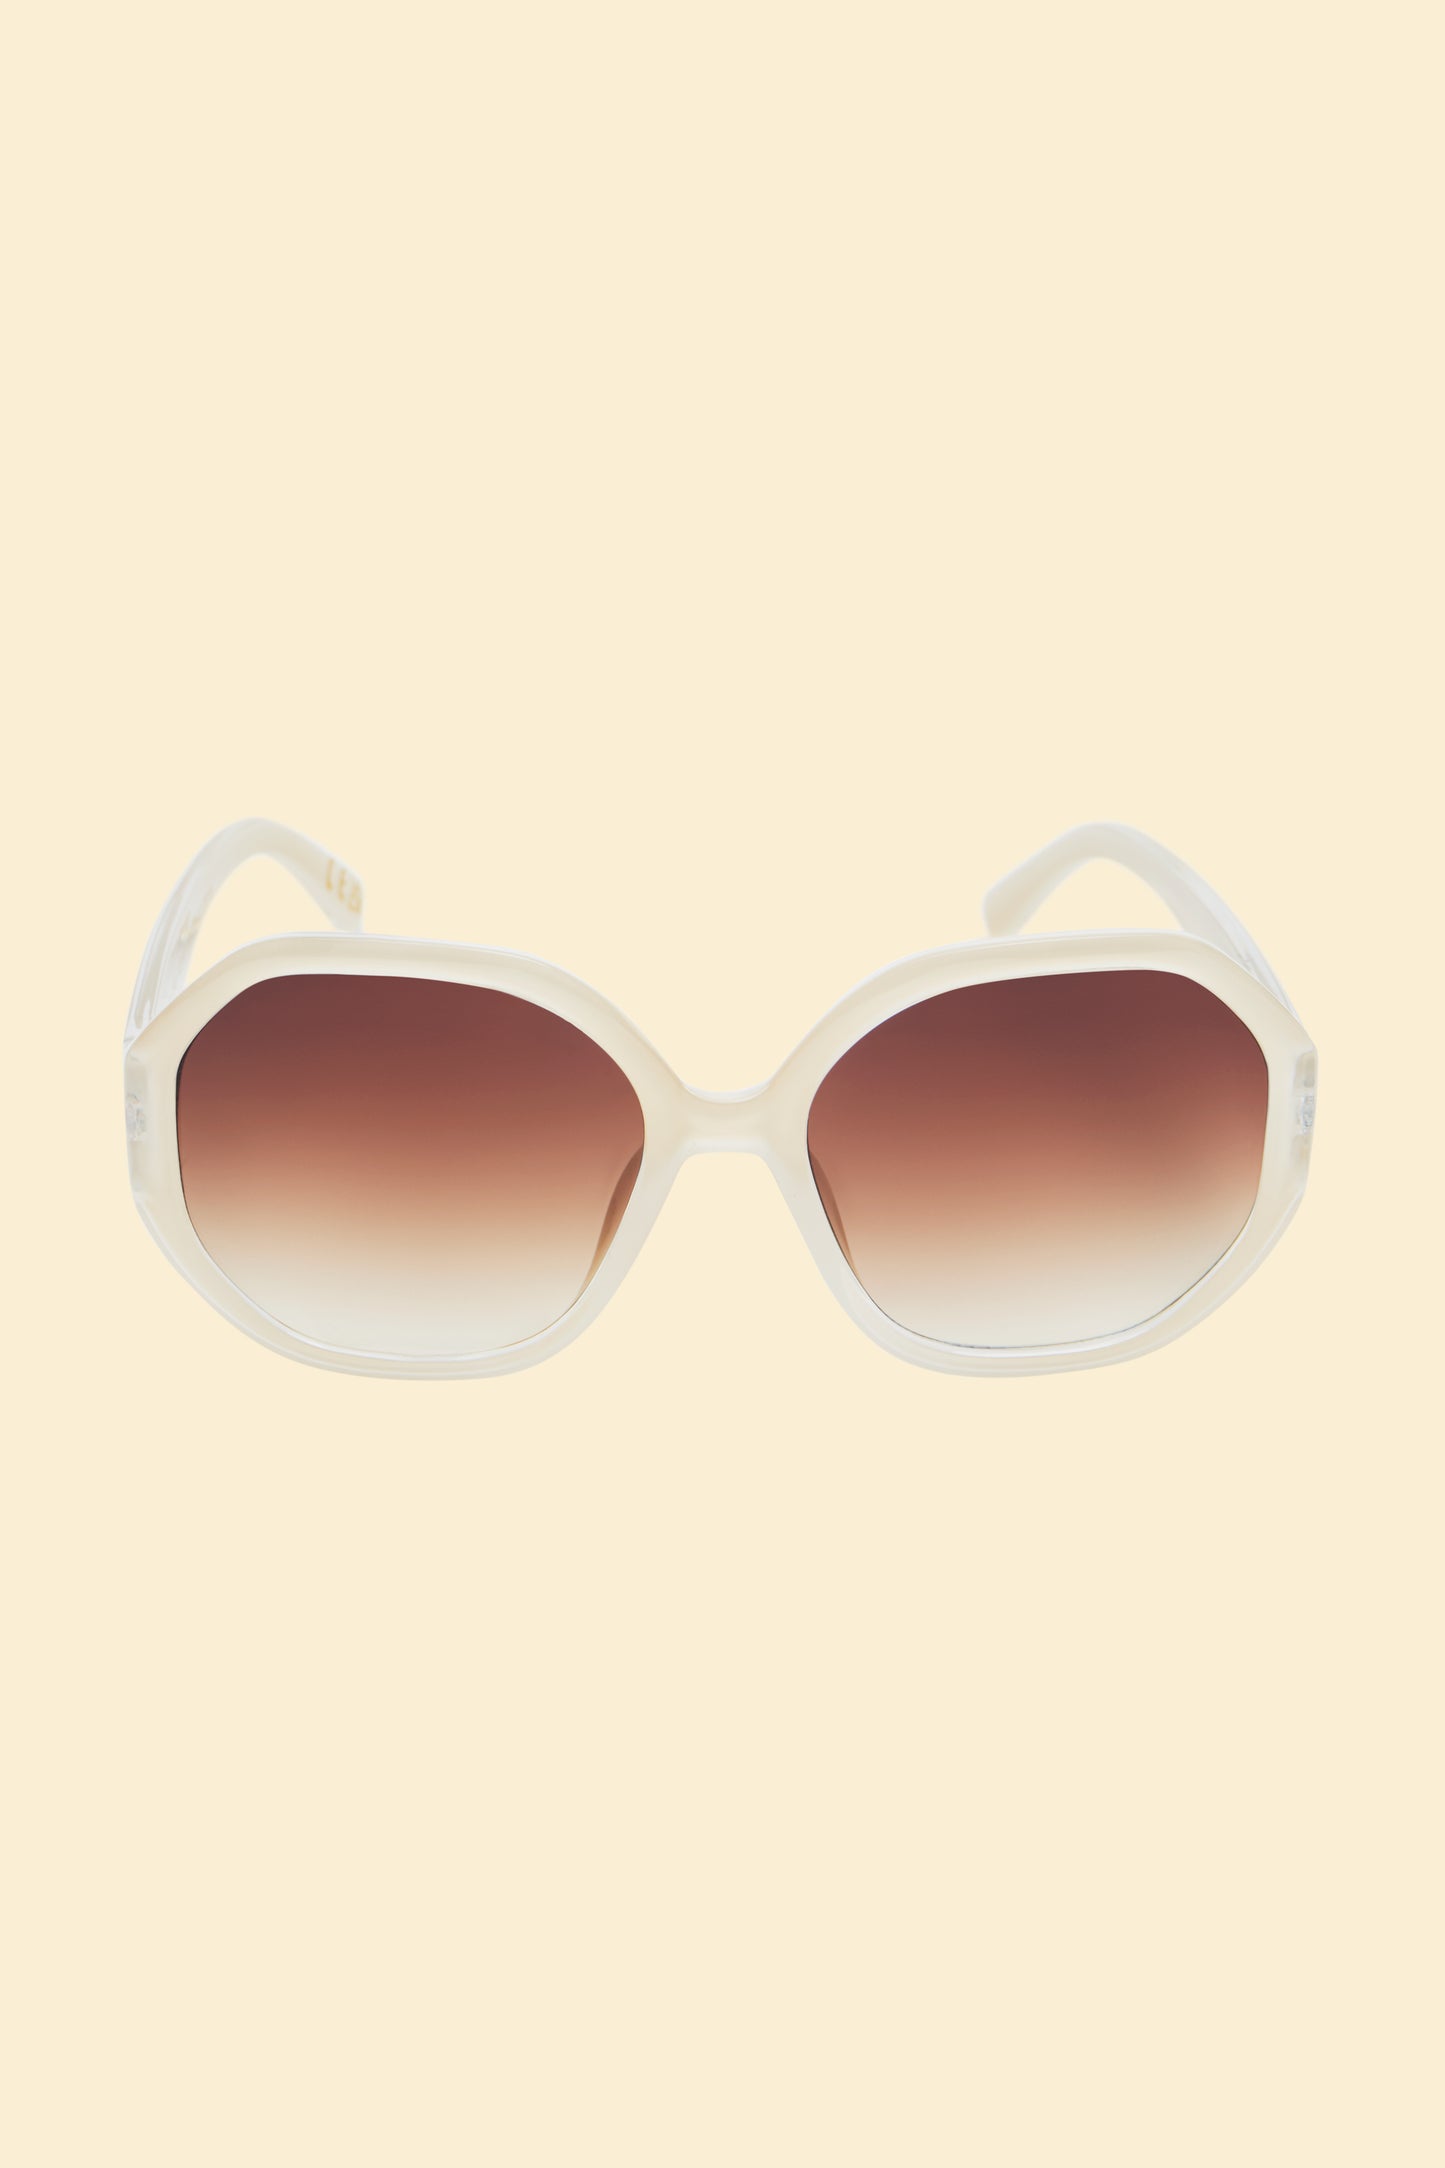 Powder Limited Edition Sunglasses